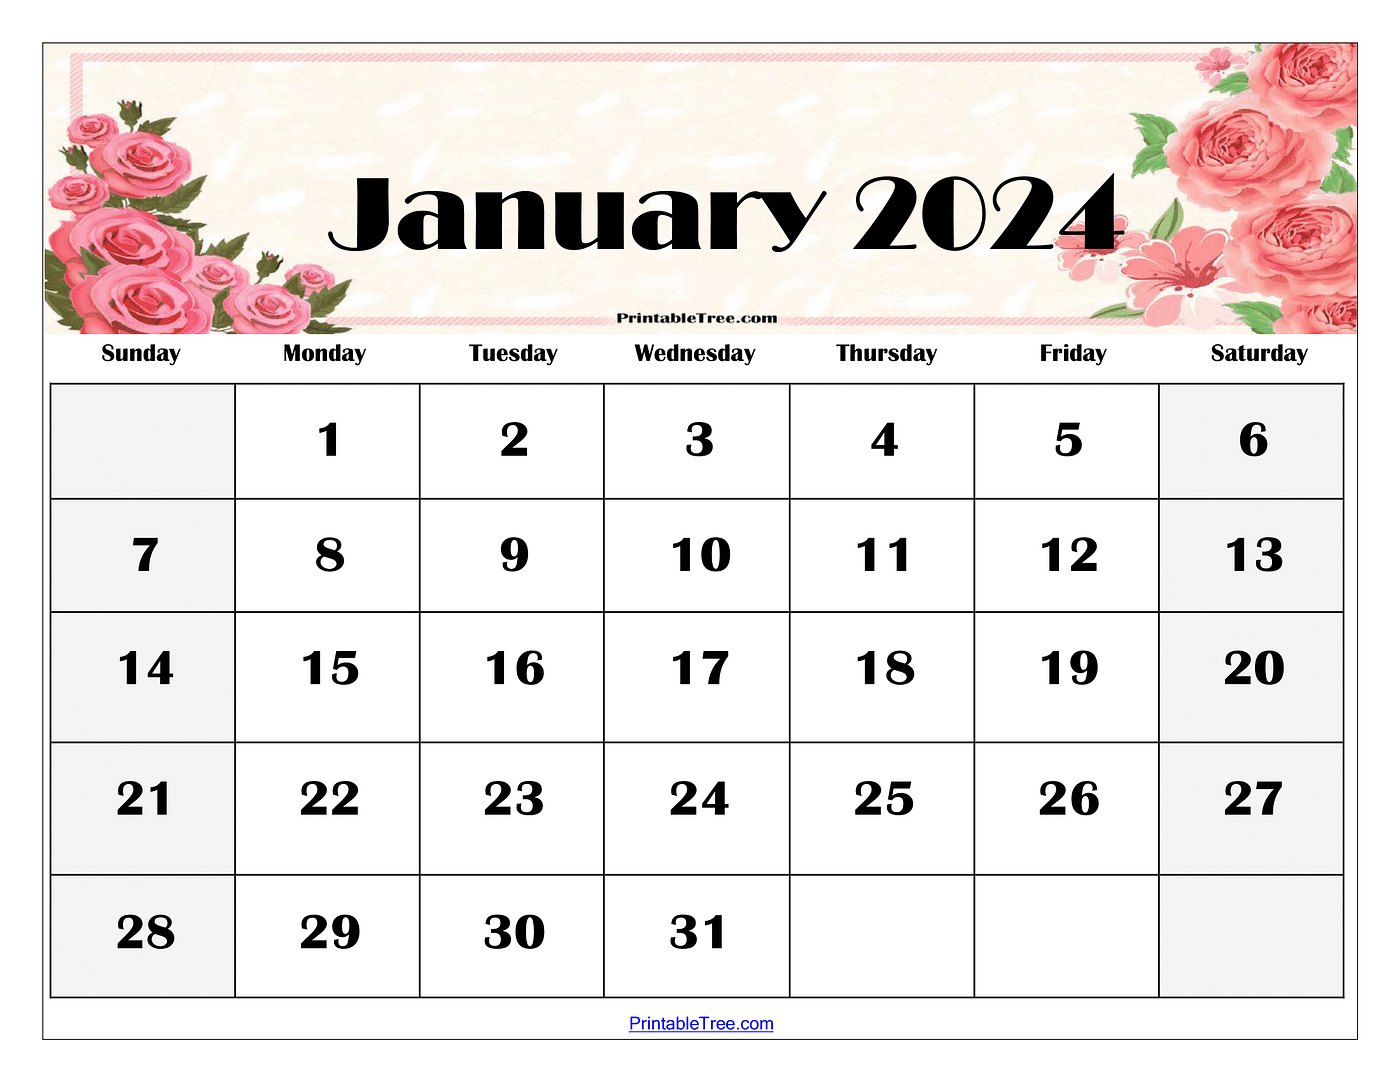 January 2024 Calendar Printable - Printable Tree - Medium | Printable Calendar 2024 A3